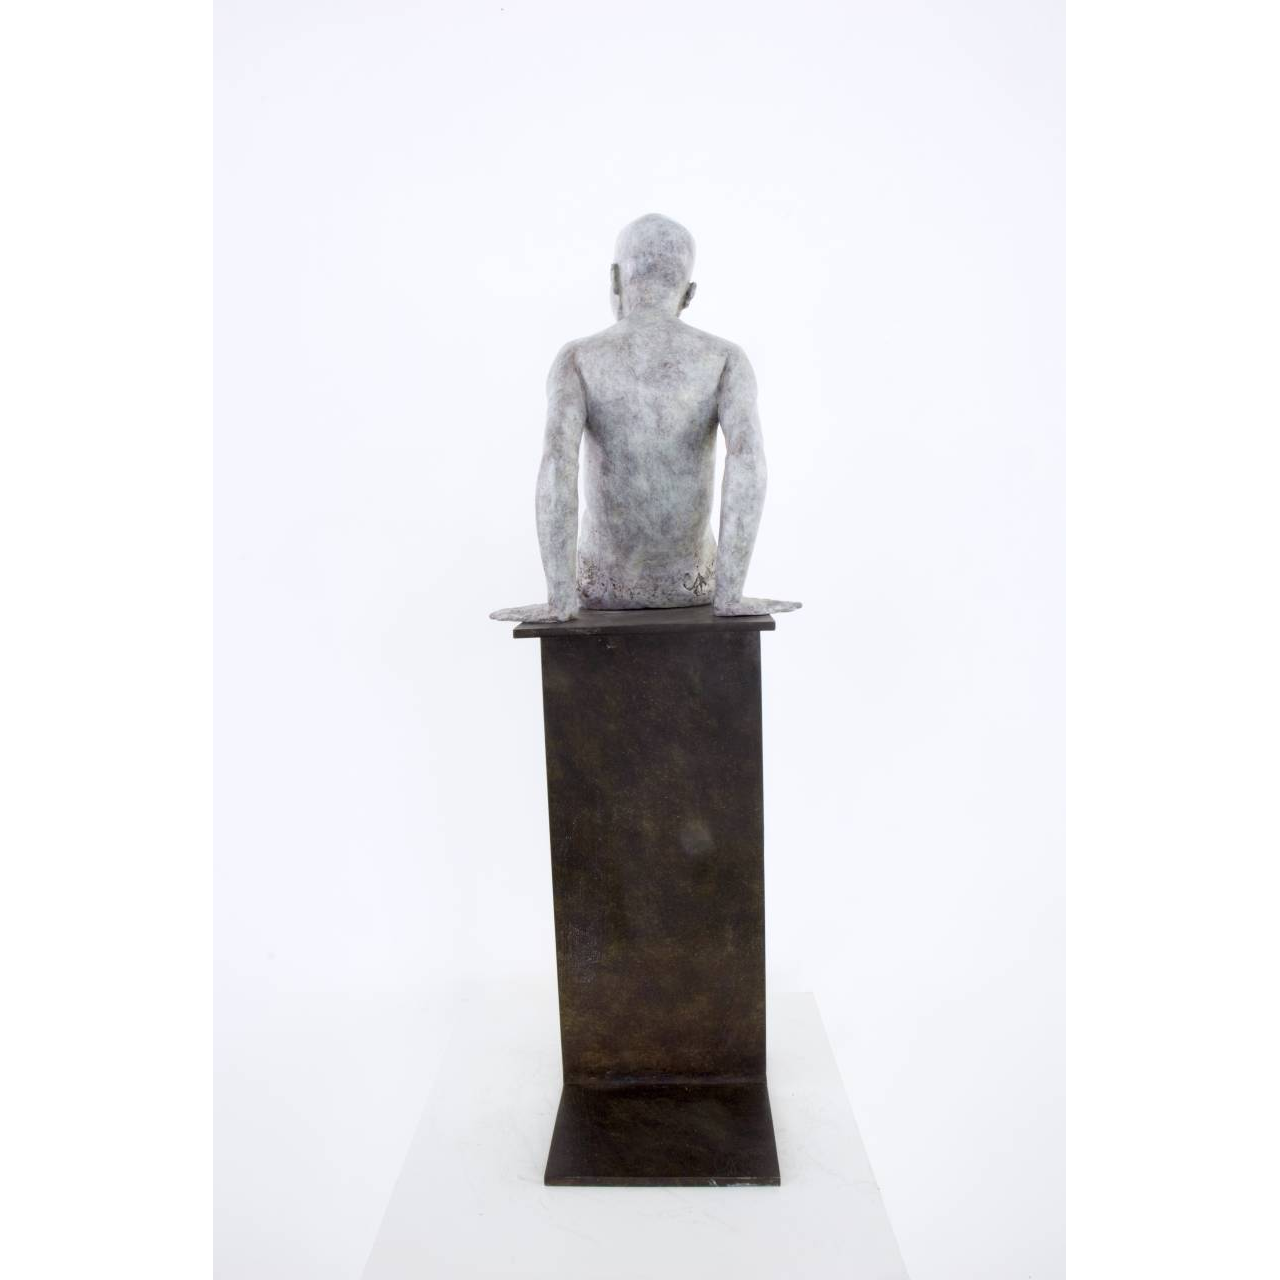 Claude JUSTAMON, L’ appel, bronze (8+4 E.A.), 54 x 31 x 25 cm